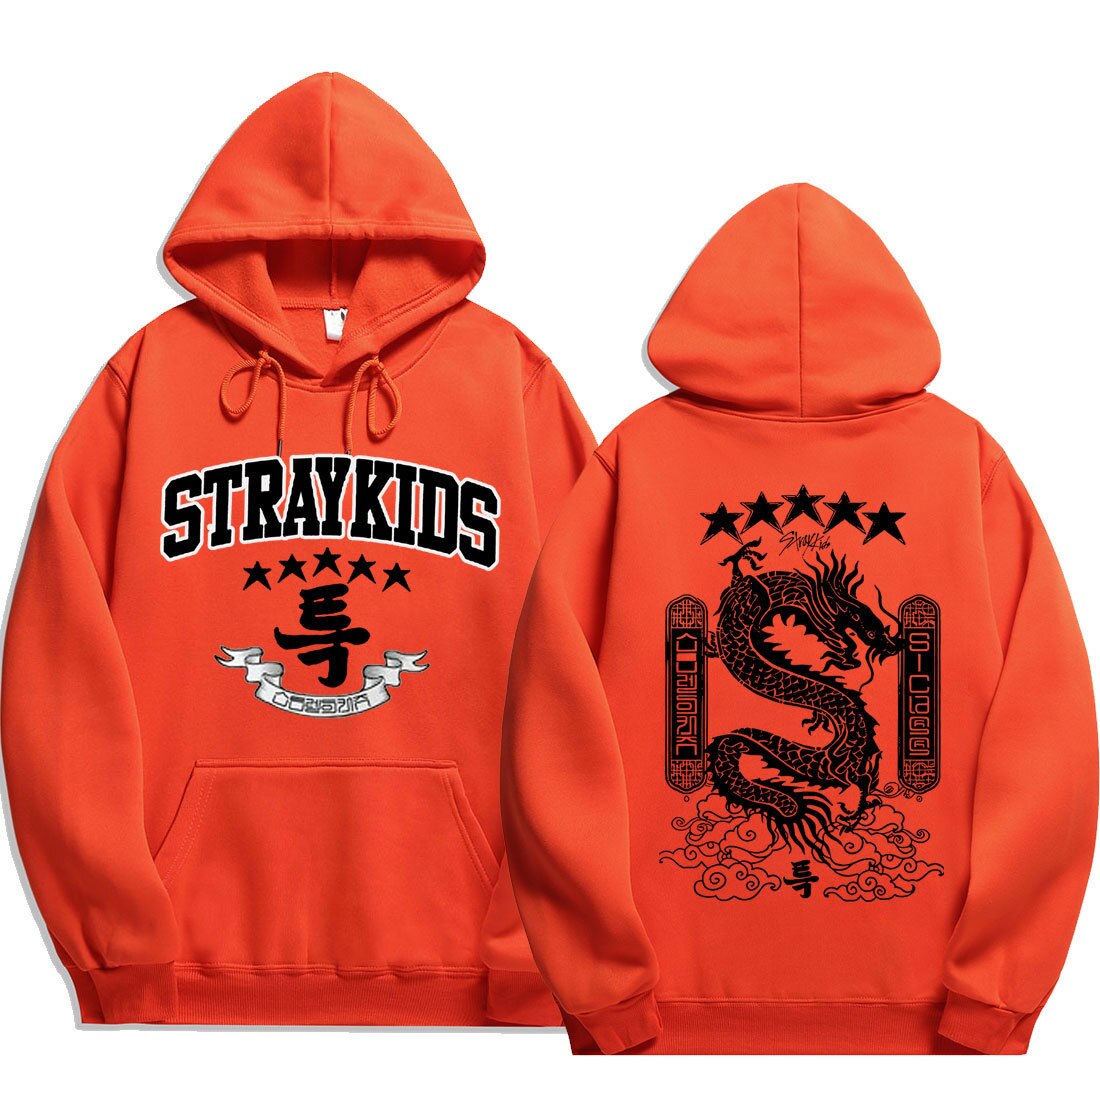 Stray Kids 5 Star Hoodies